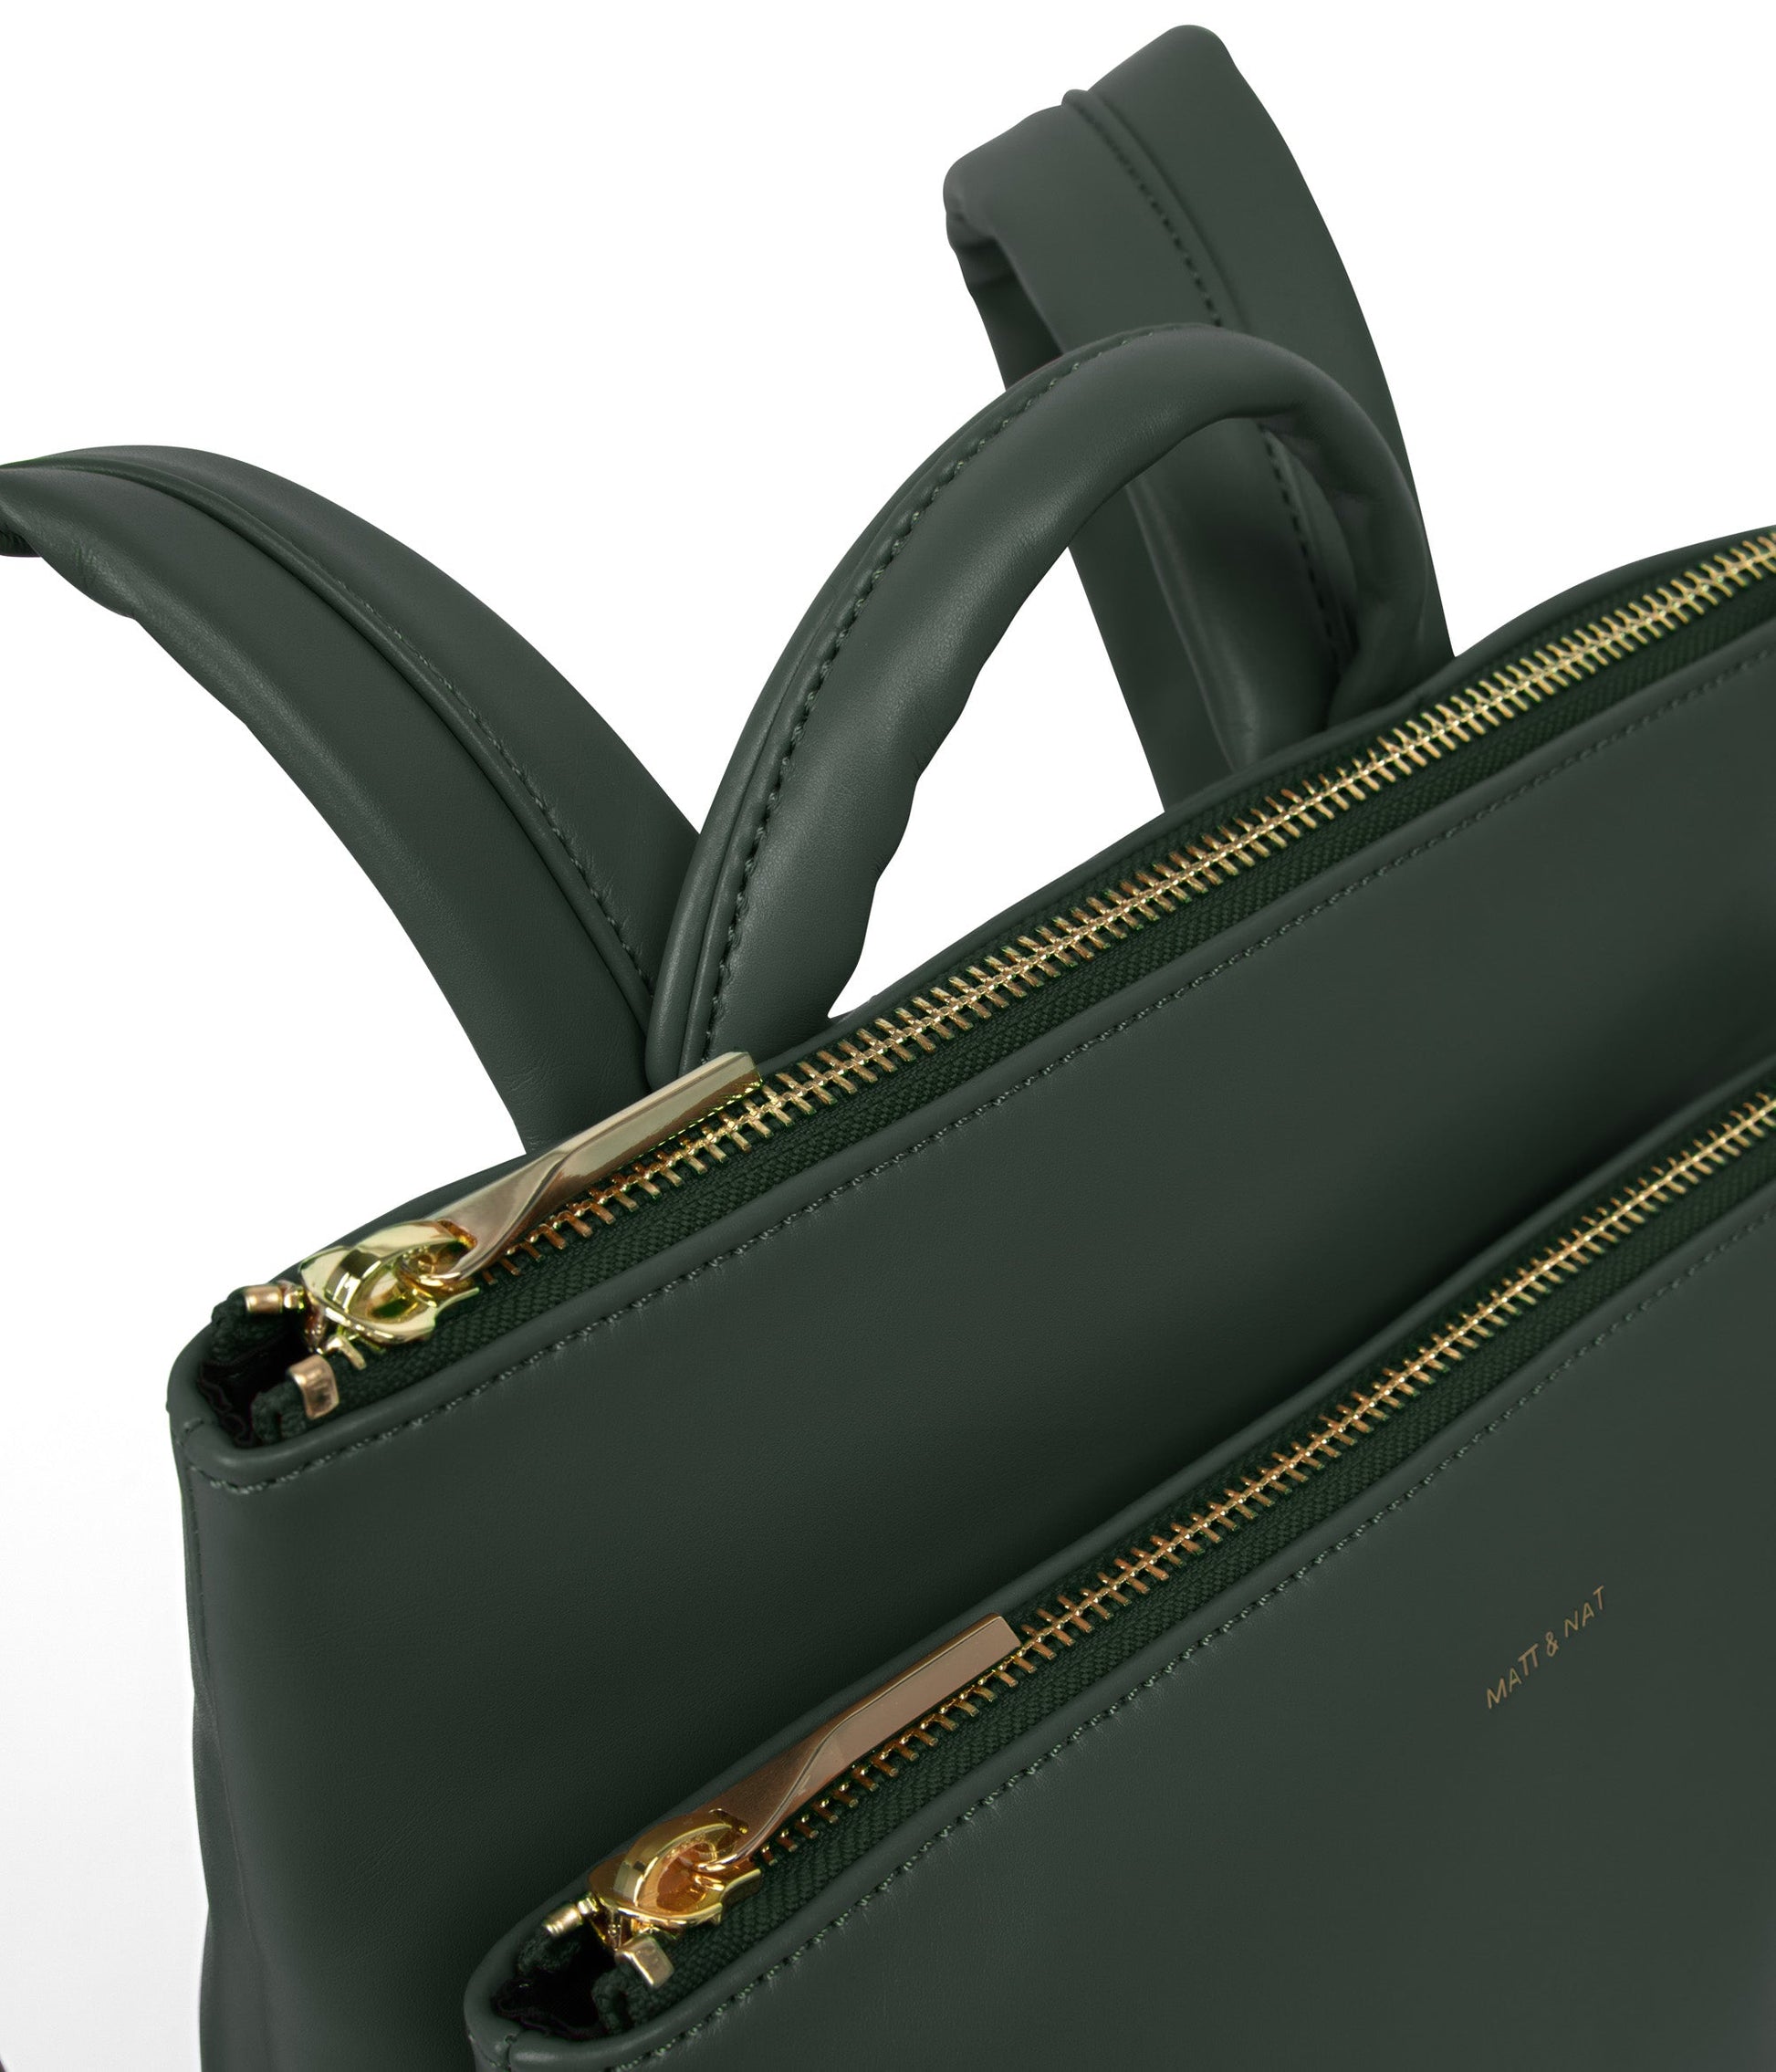 NARA Vegan Backpack - Loom | Color: Green - variant::vineyard